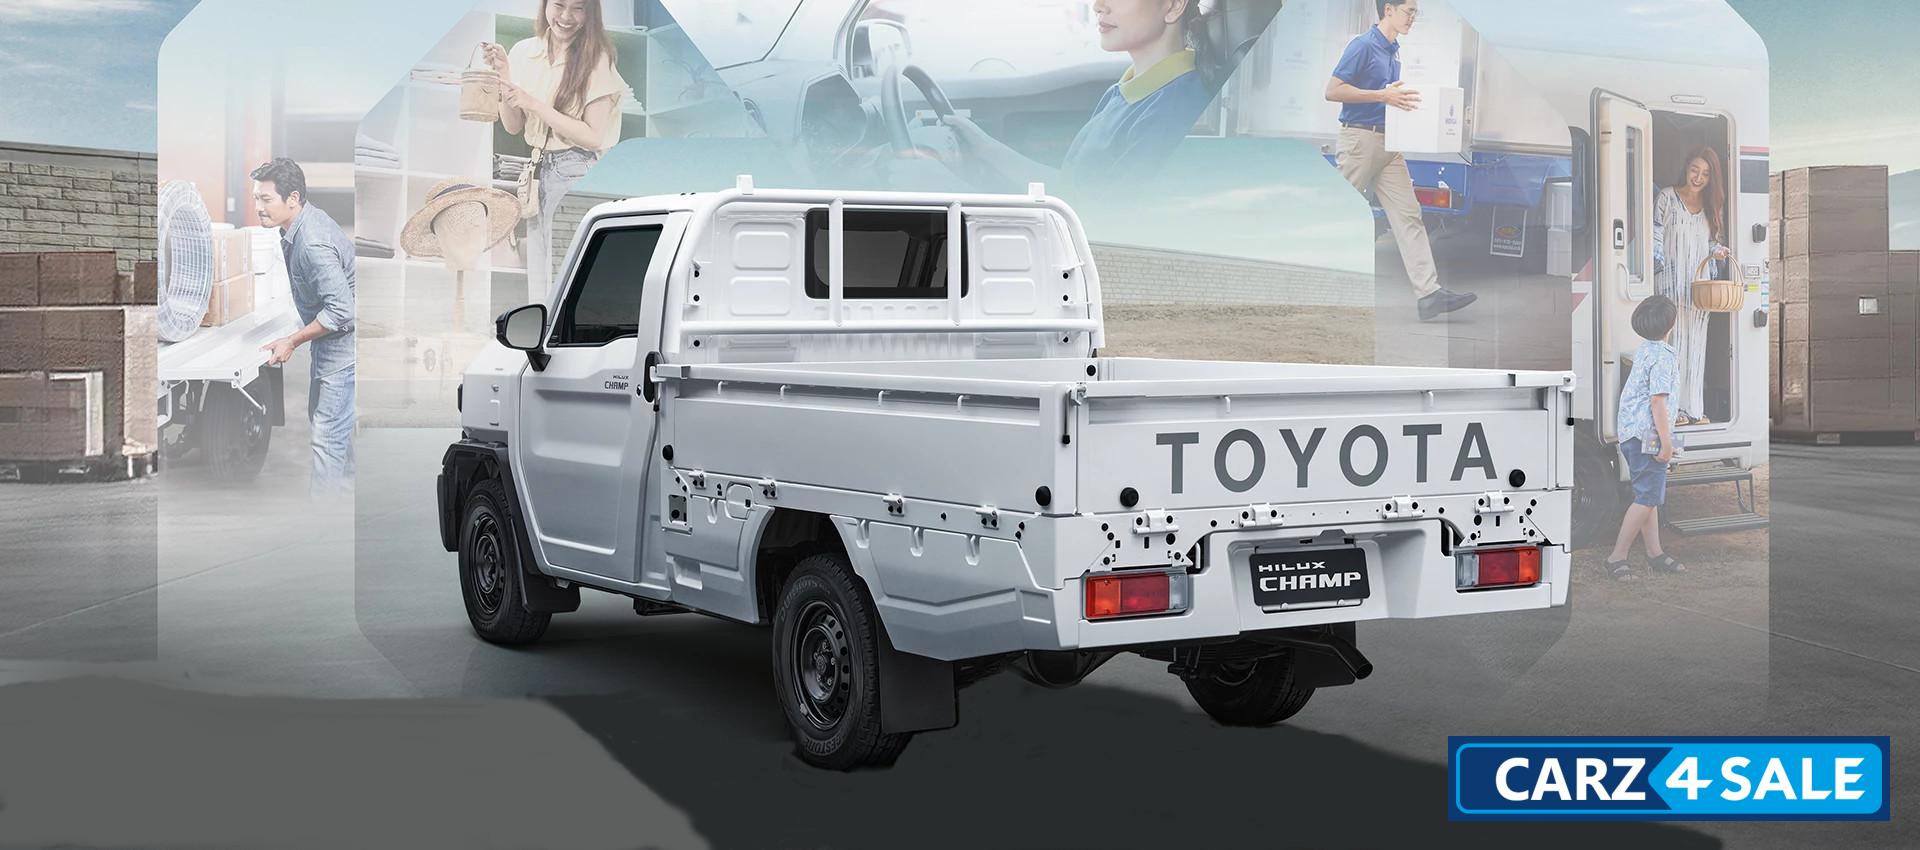 Toyota Hilux Champ Full Details